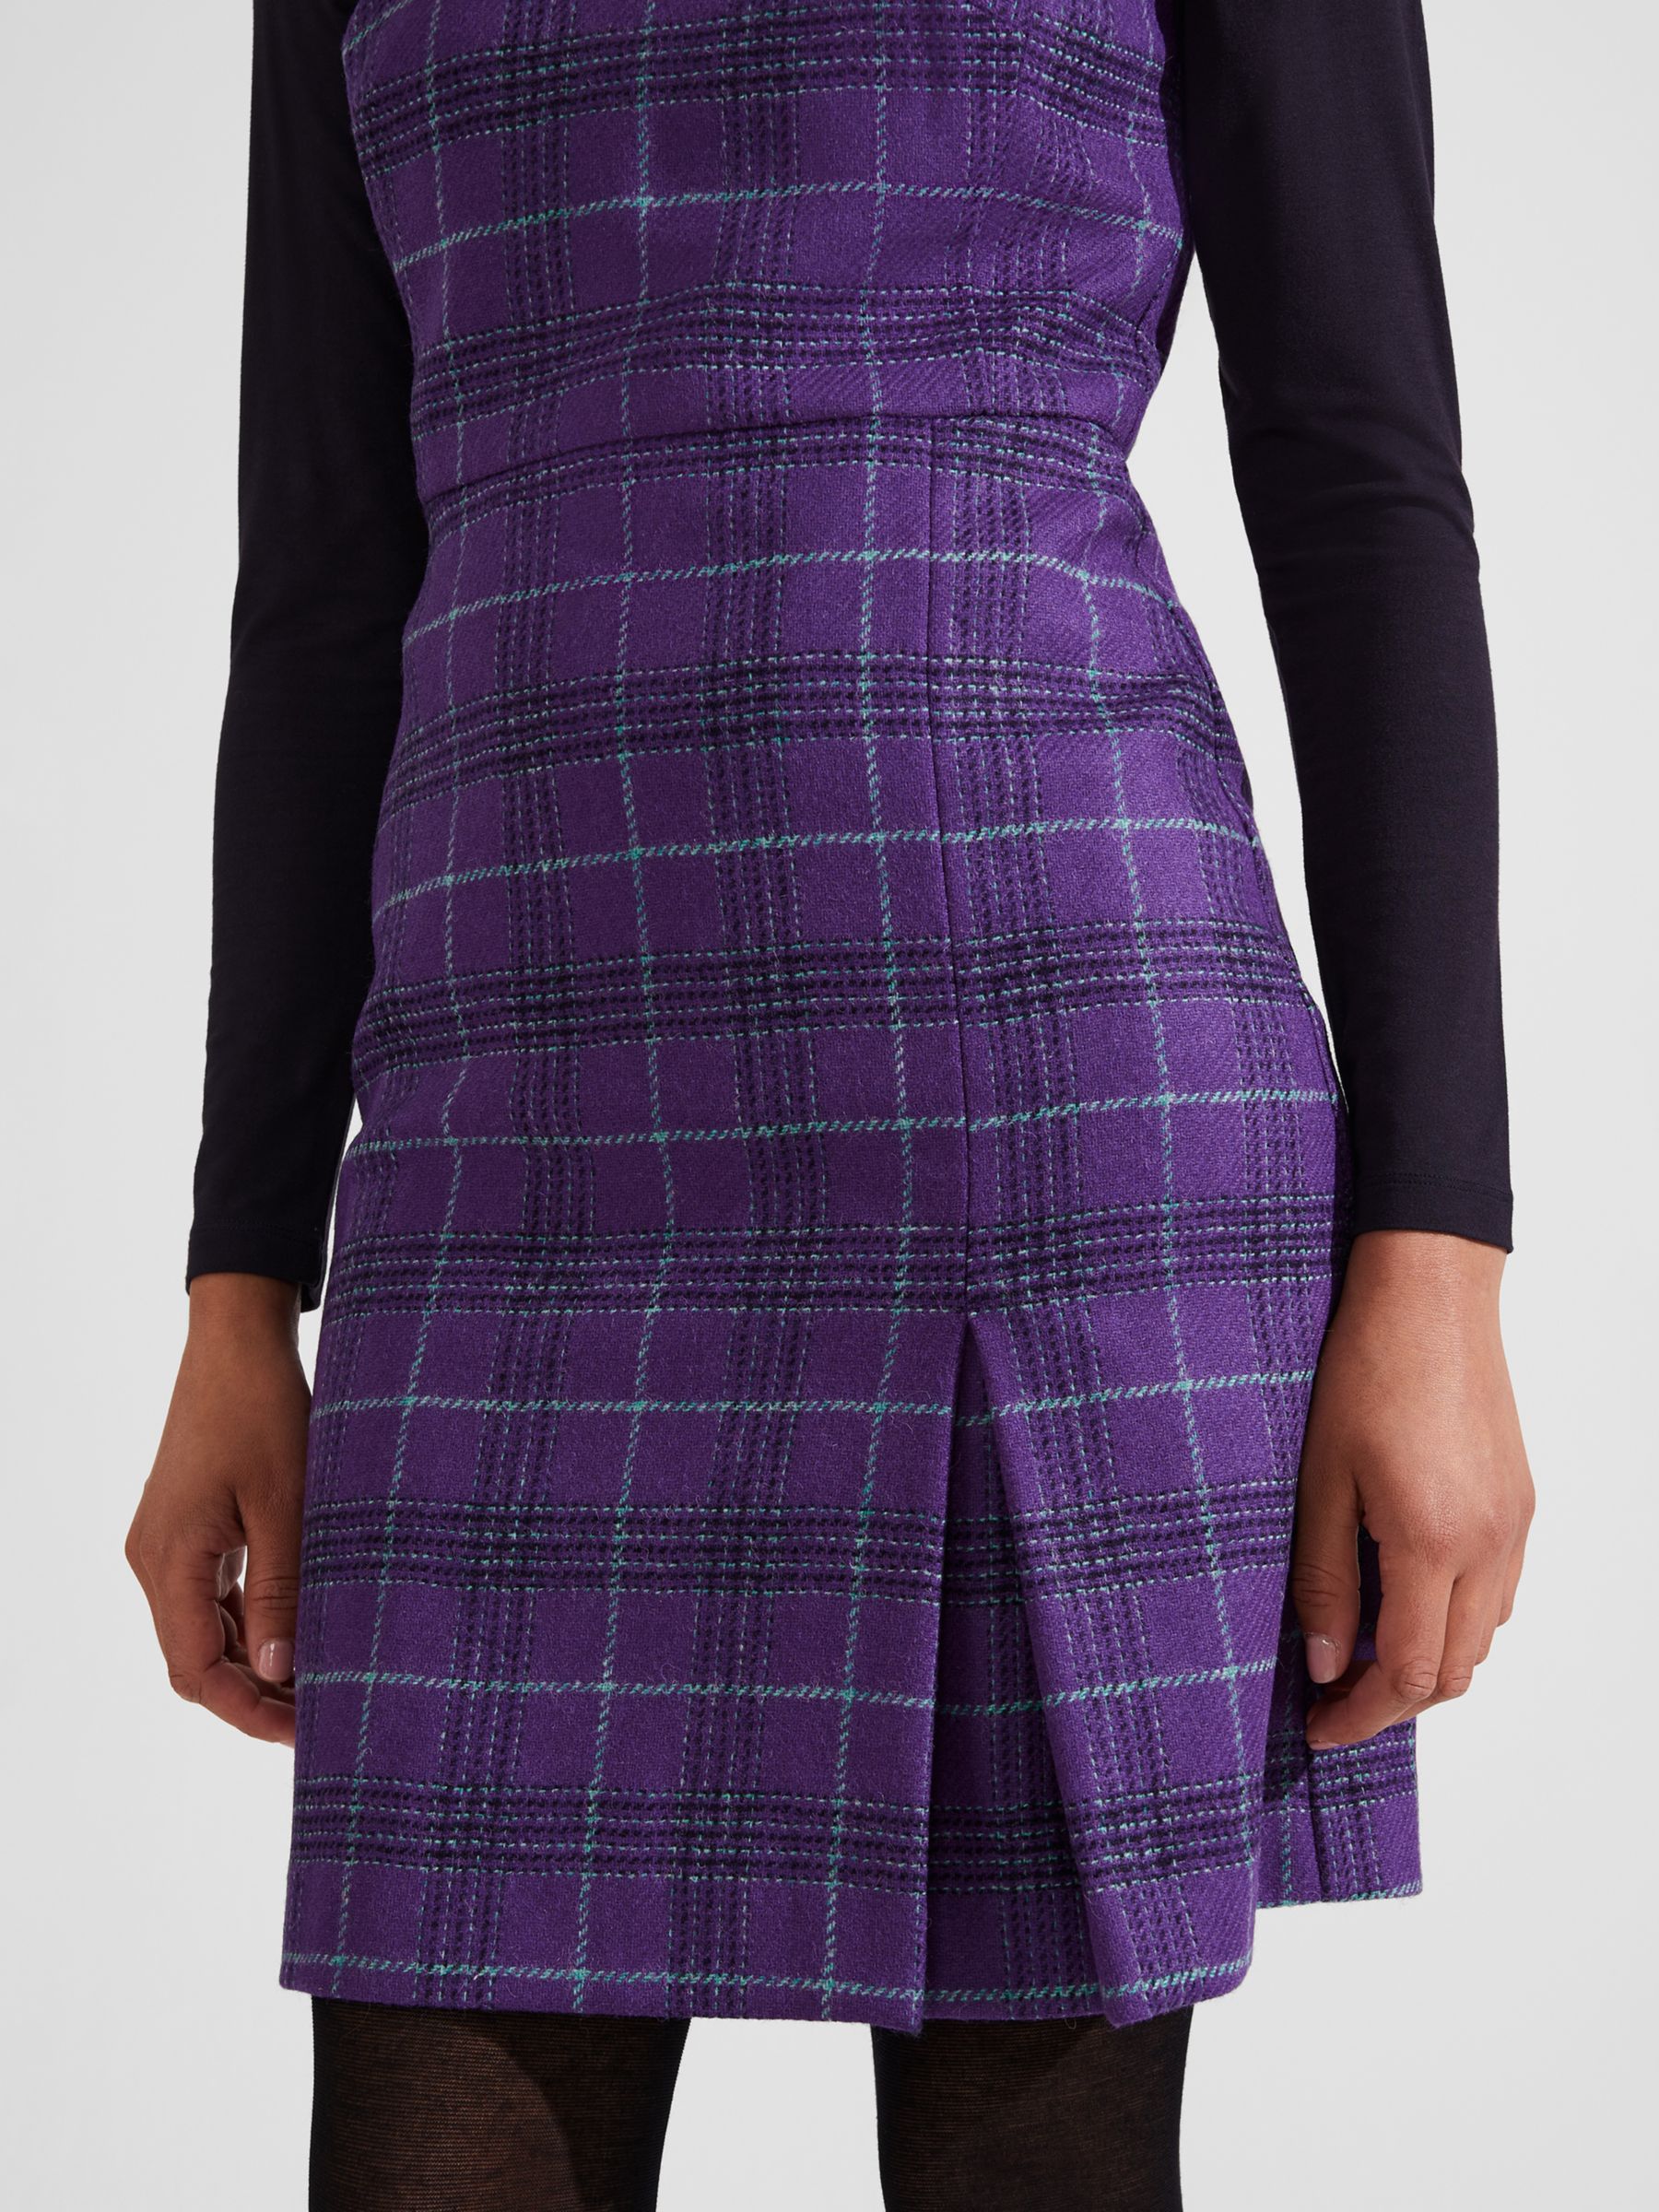 Hobbs Avery Check Wool Mini Sheath Dress, Purple/Multi, 18